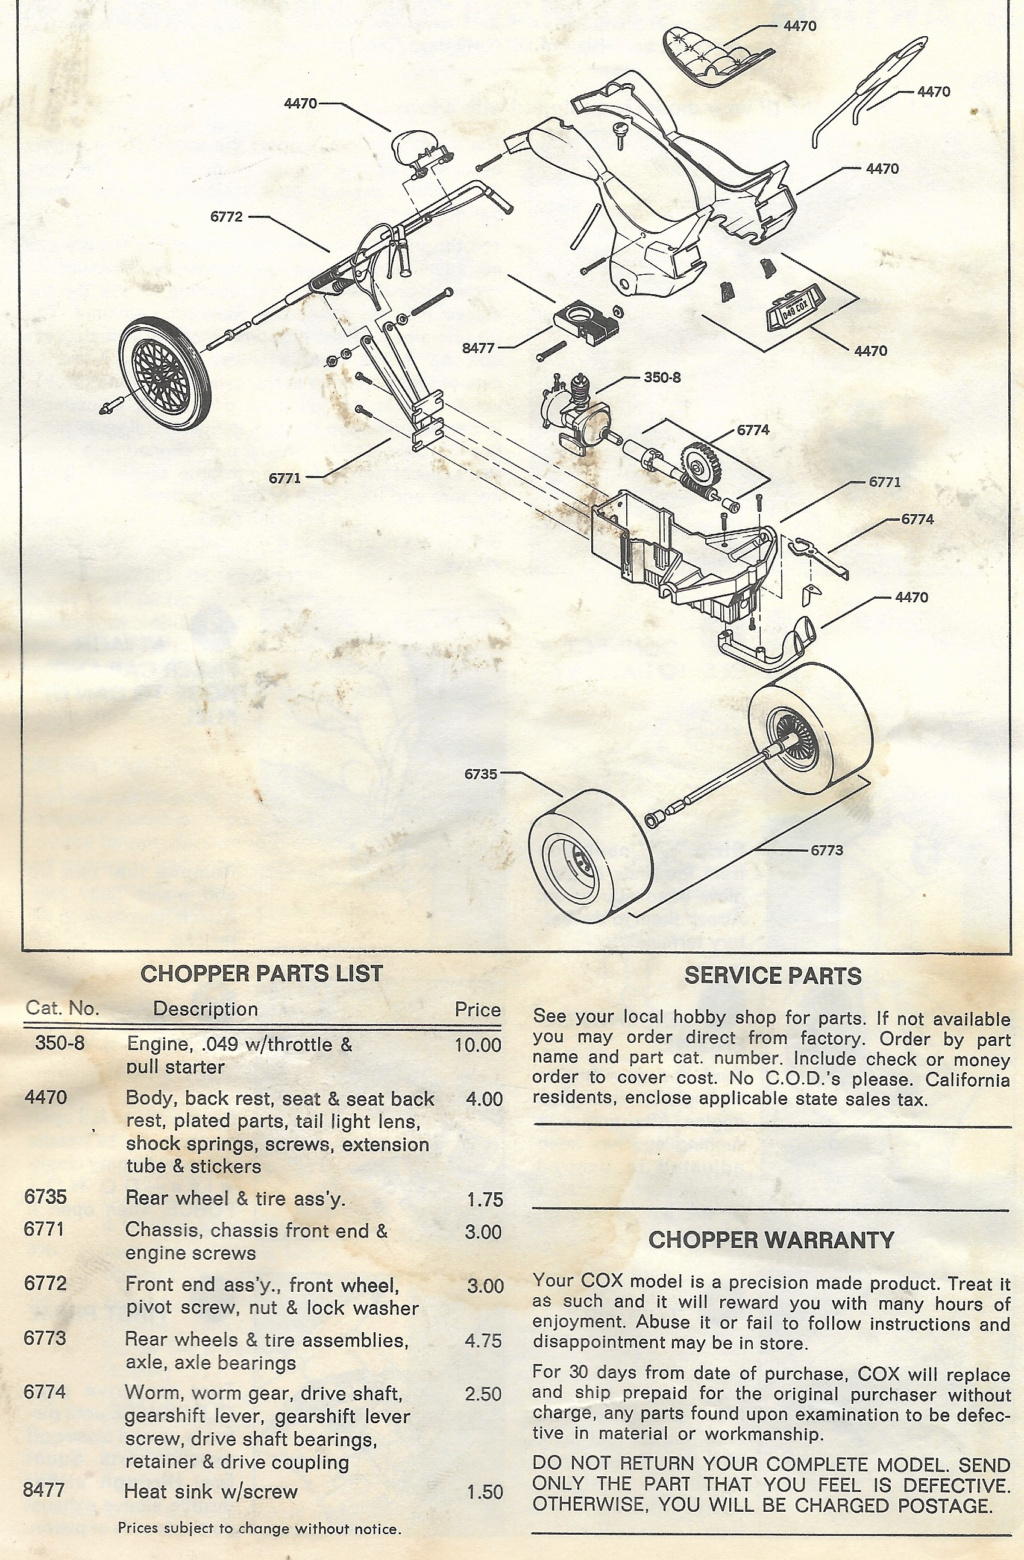 Cox Trike / Chopper Restoration  - Speedometer Decal?  Scan_189